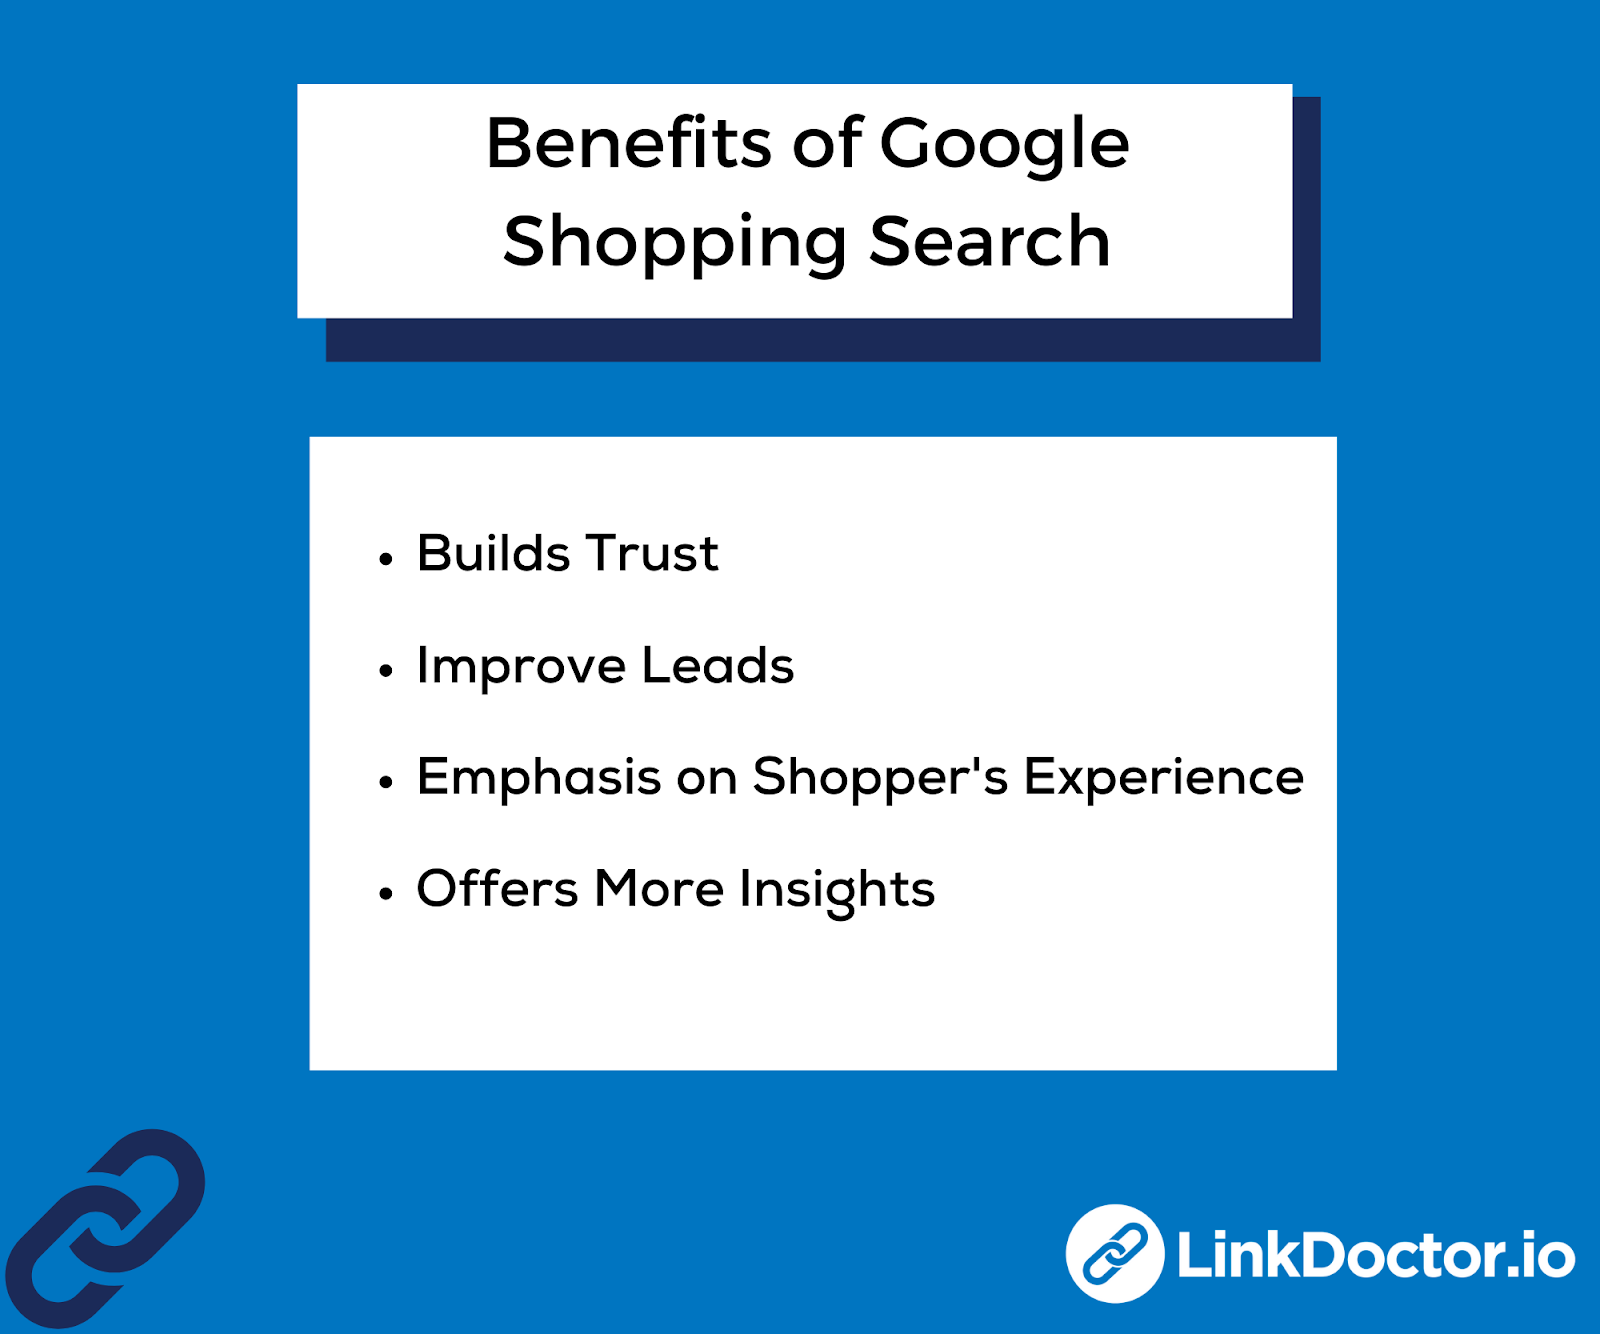 Google Shopping Search - Benefits